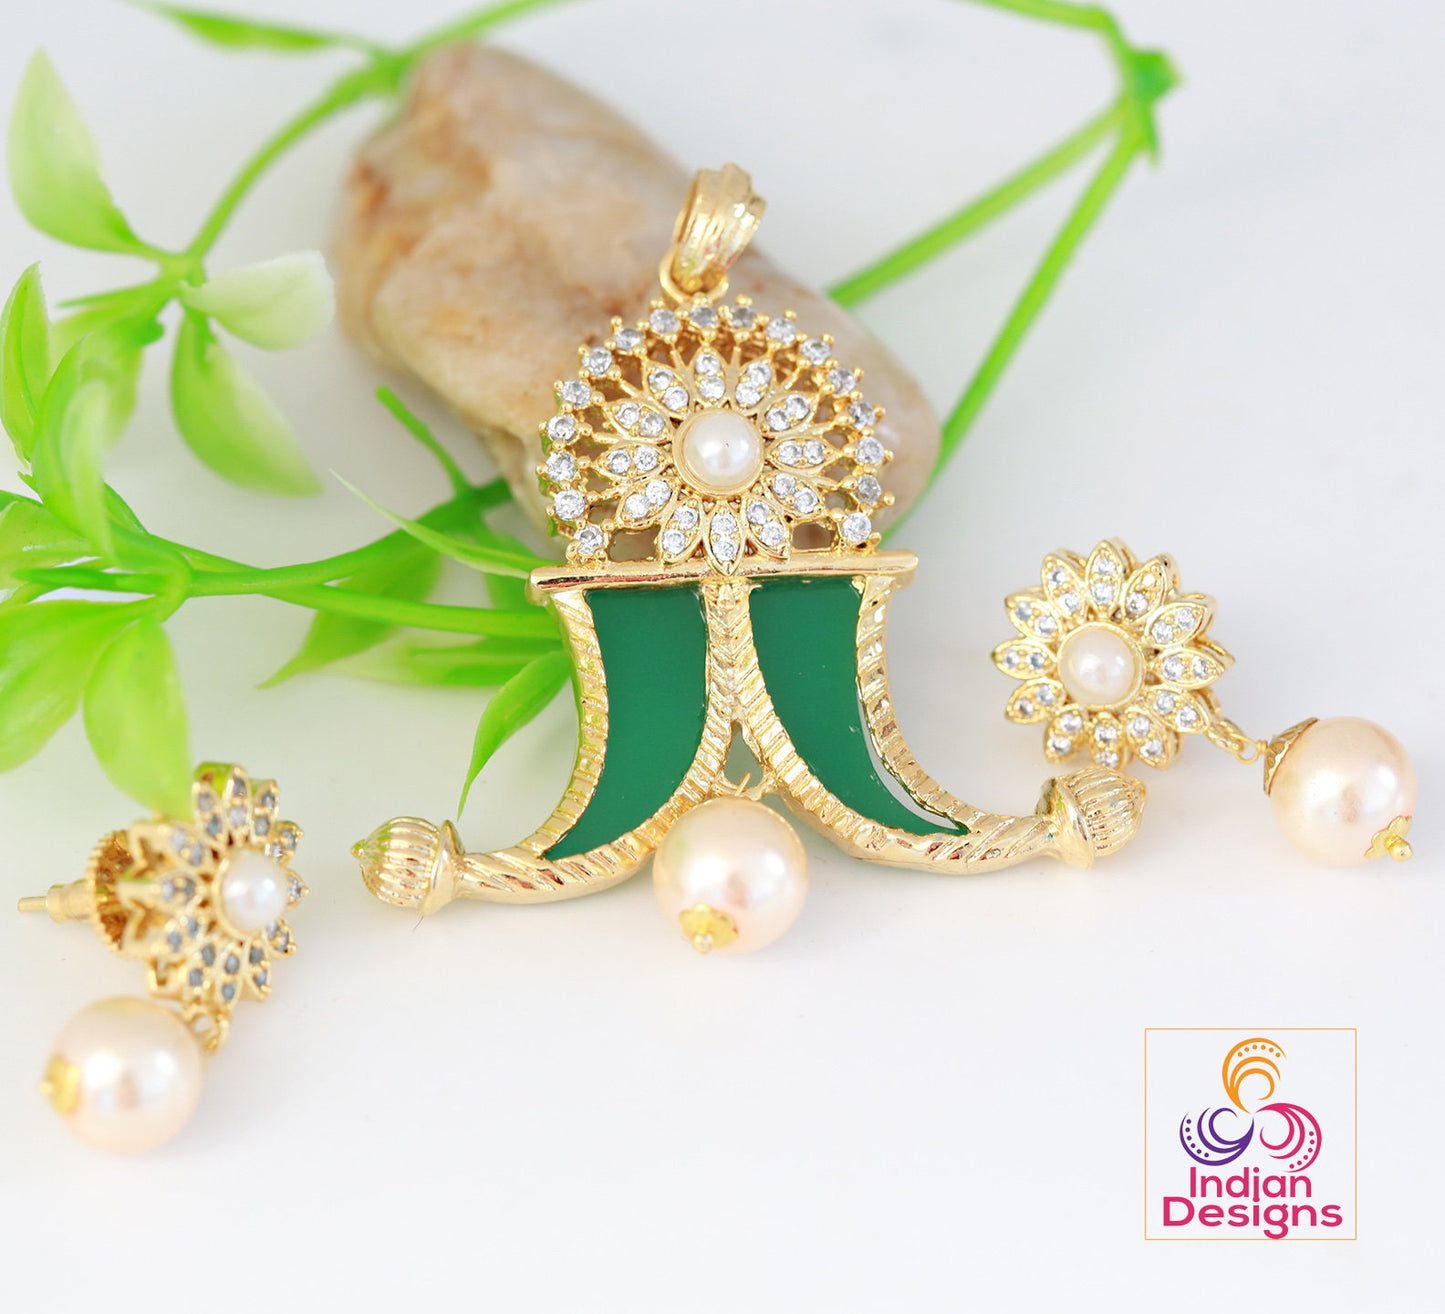 Gold plated Puligoru Pendant | American Diamond tiger claw pendant Designs | AD locket | cz pearl pendant | South Indian jewelry designs